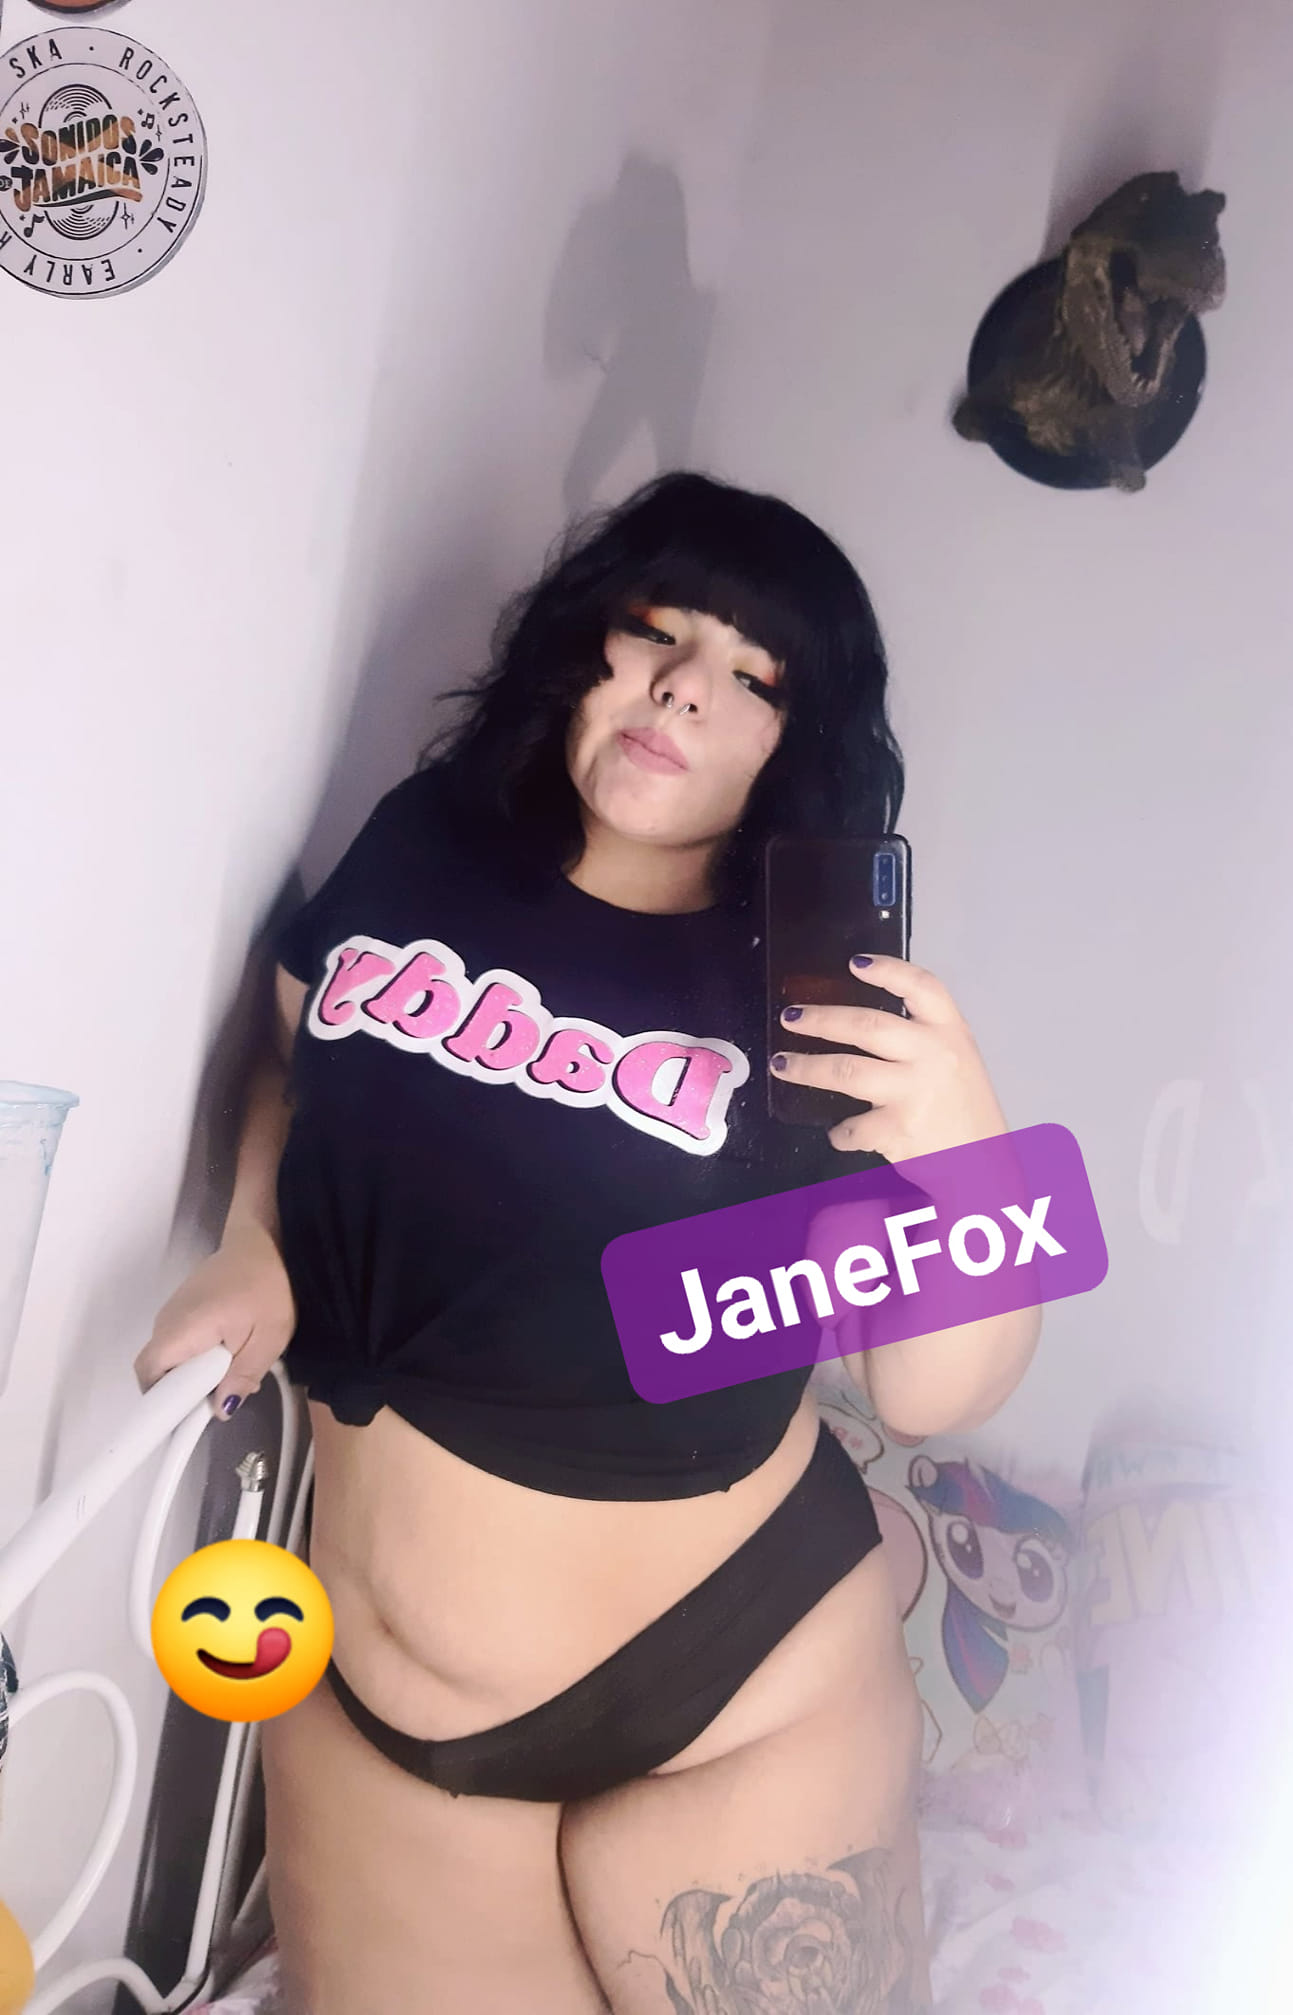 Jane Fox